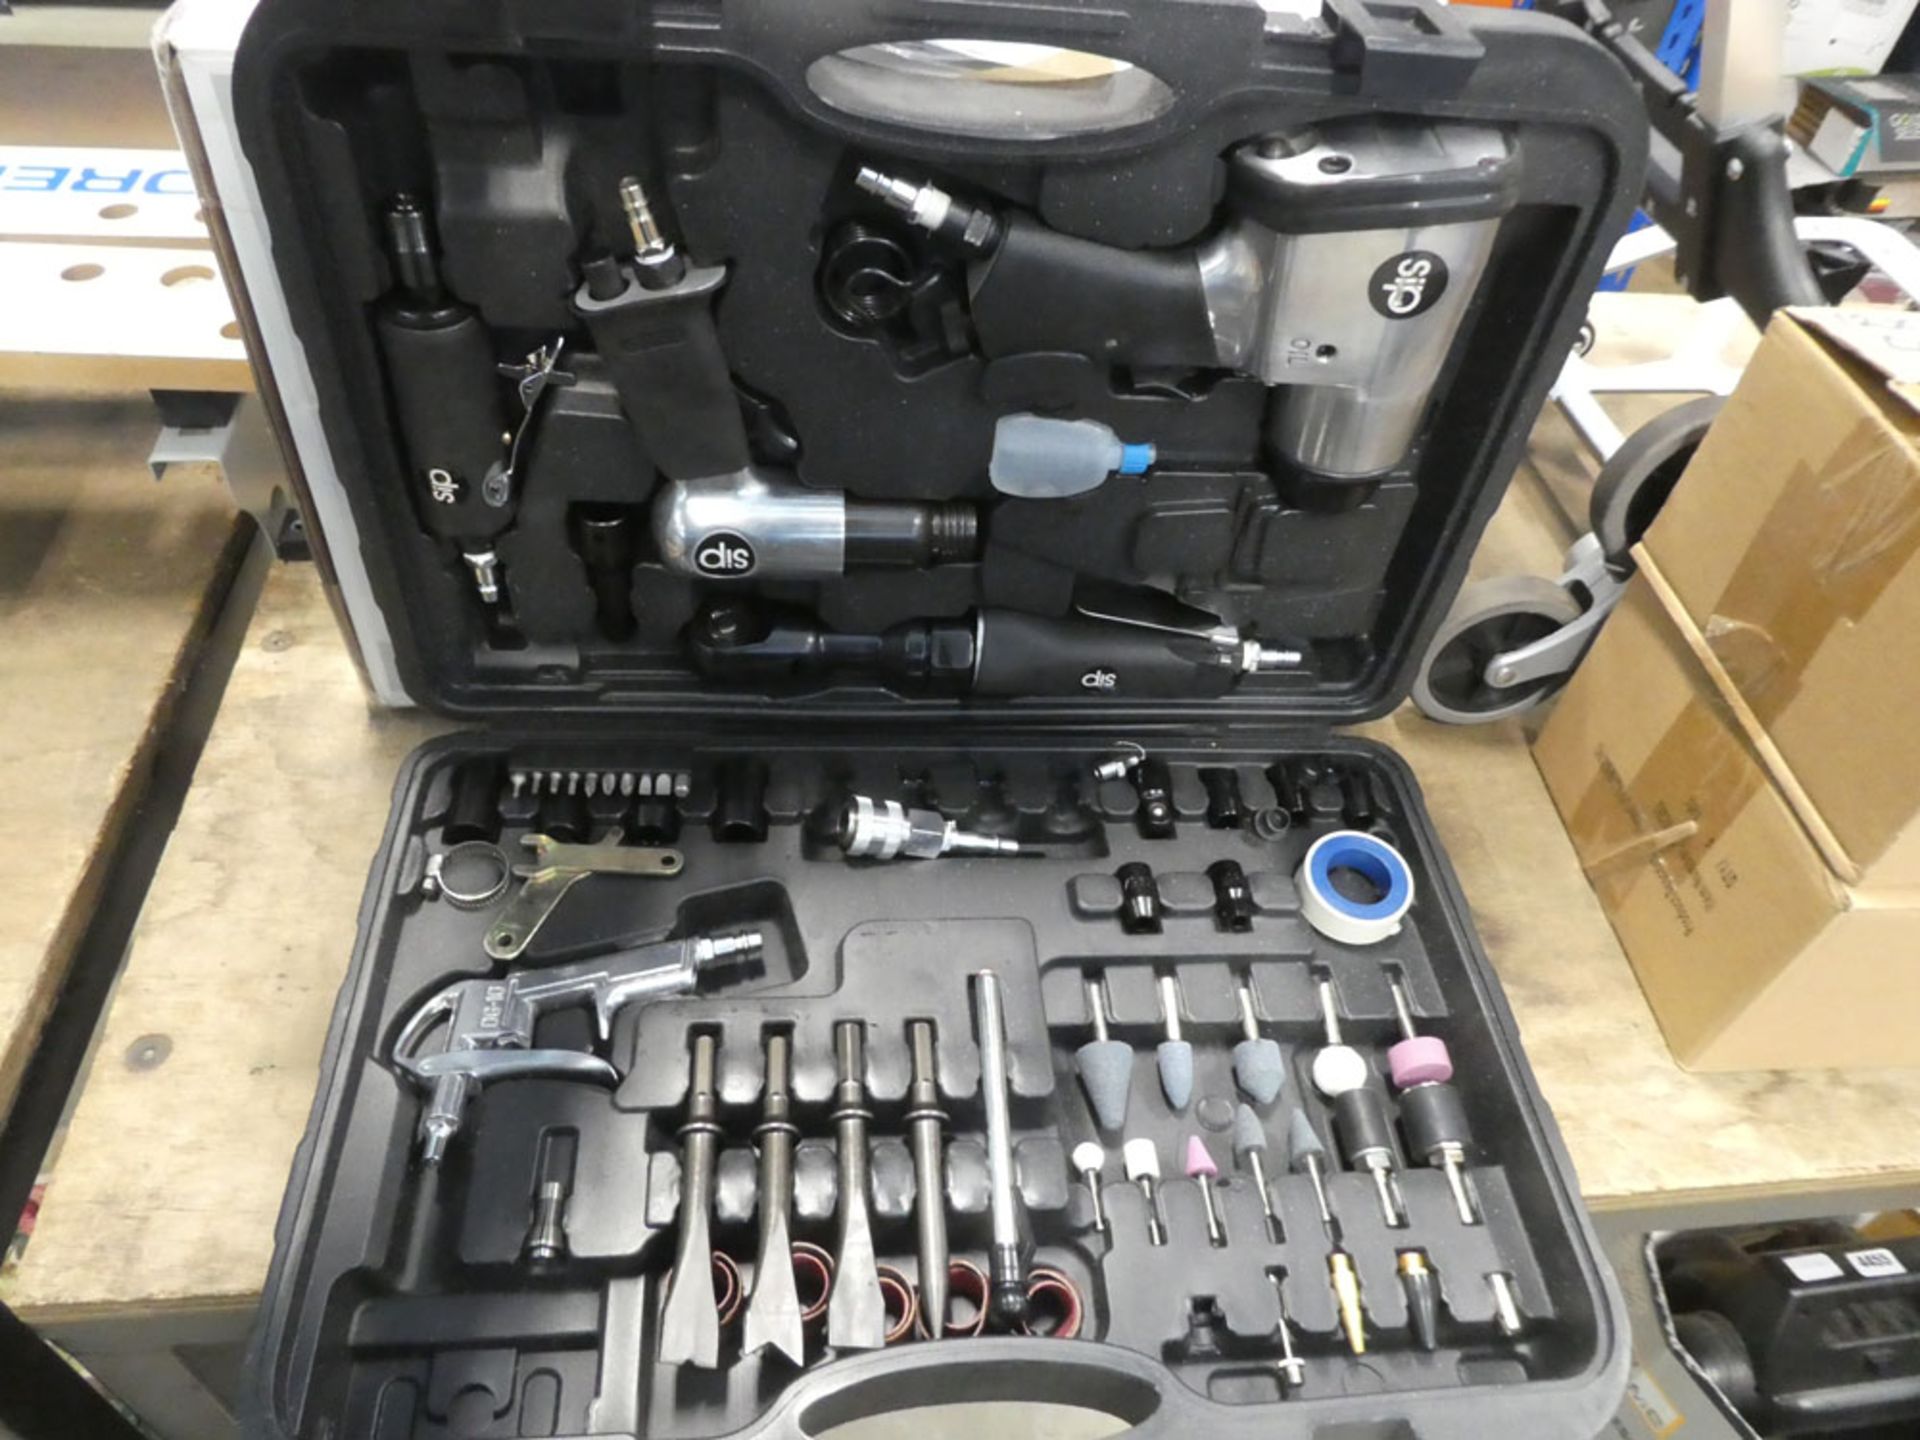 Silverline air tools kit